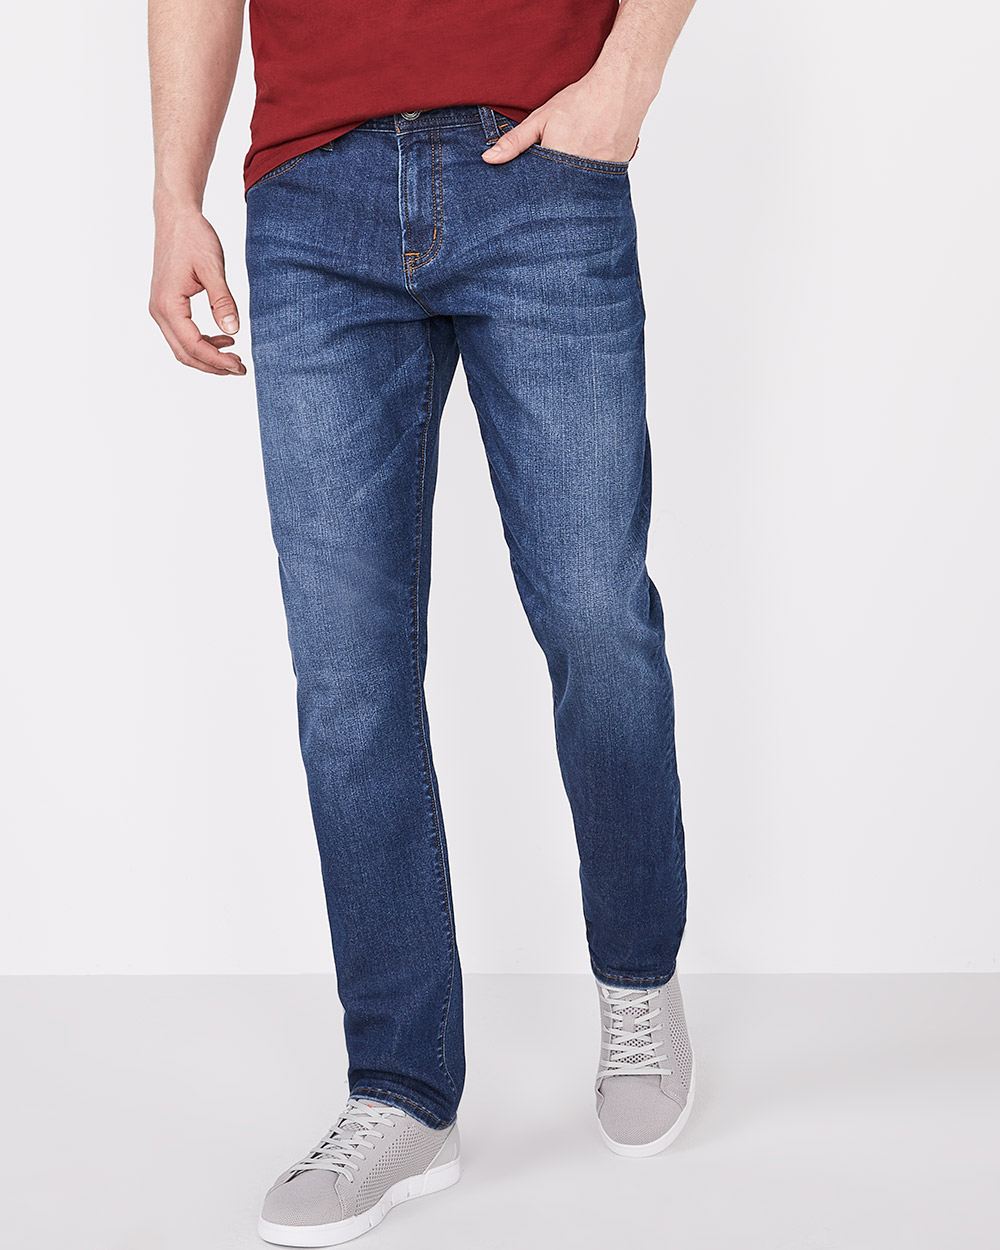 Slim leg Medium Blue stone wash Jeans | RW&CO.